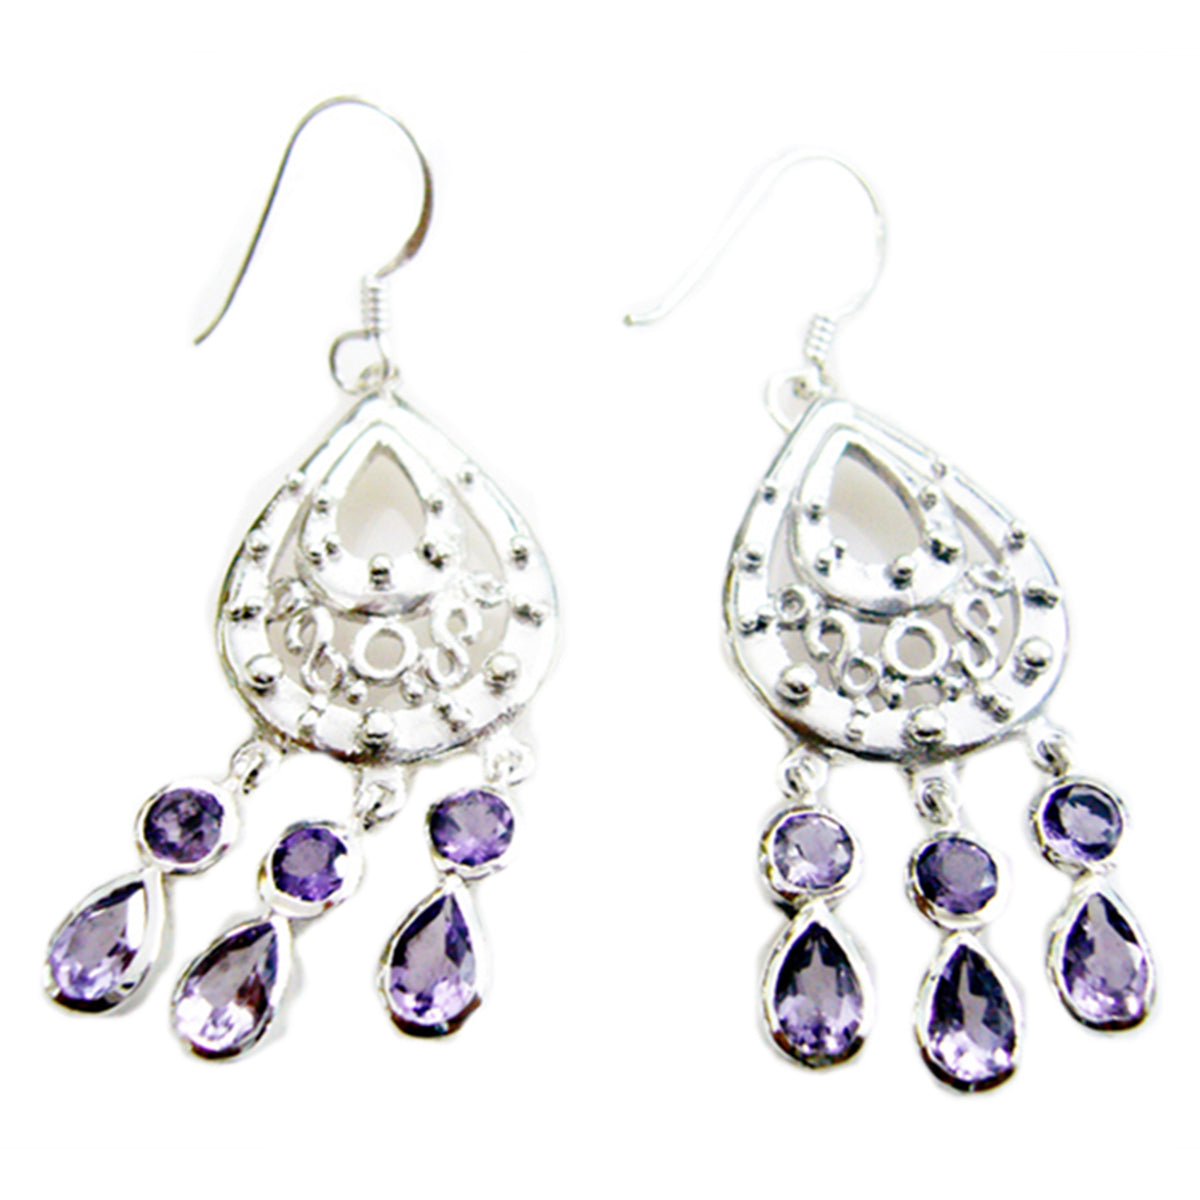 Riyo Genuine Gems multi shape Faceted Purple Amethyst Silver Earrings gift for brithday